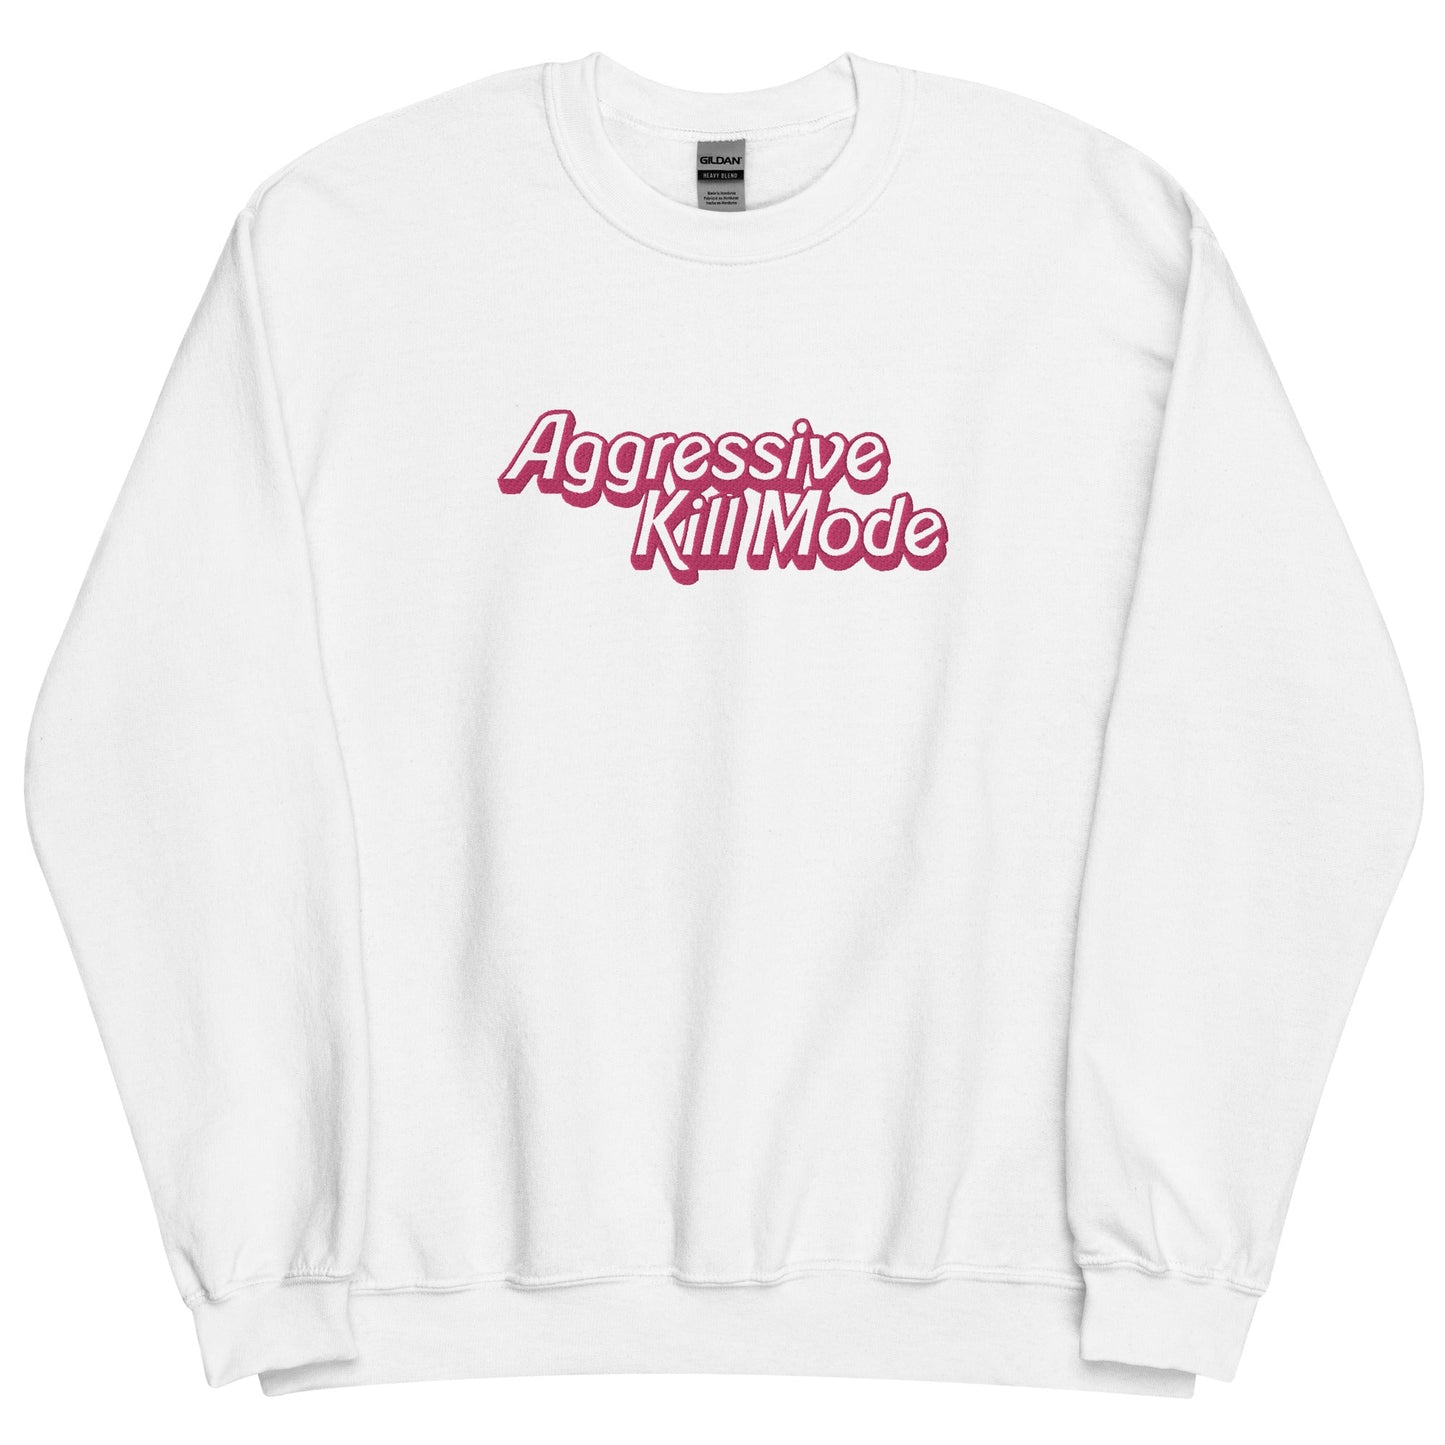 Aggressive Kill Mode Sweatshirt - twogirls1formula